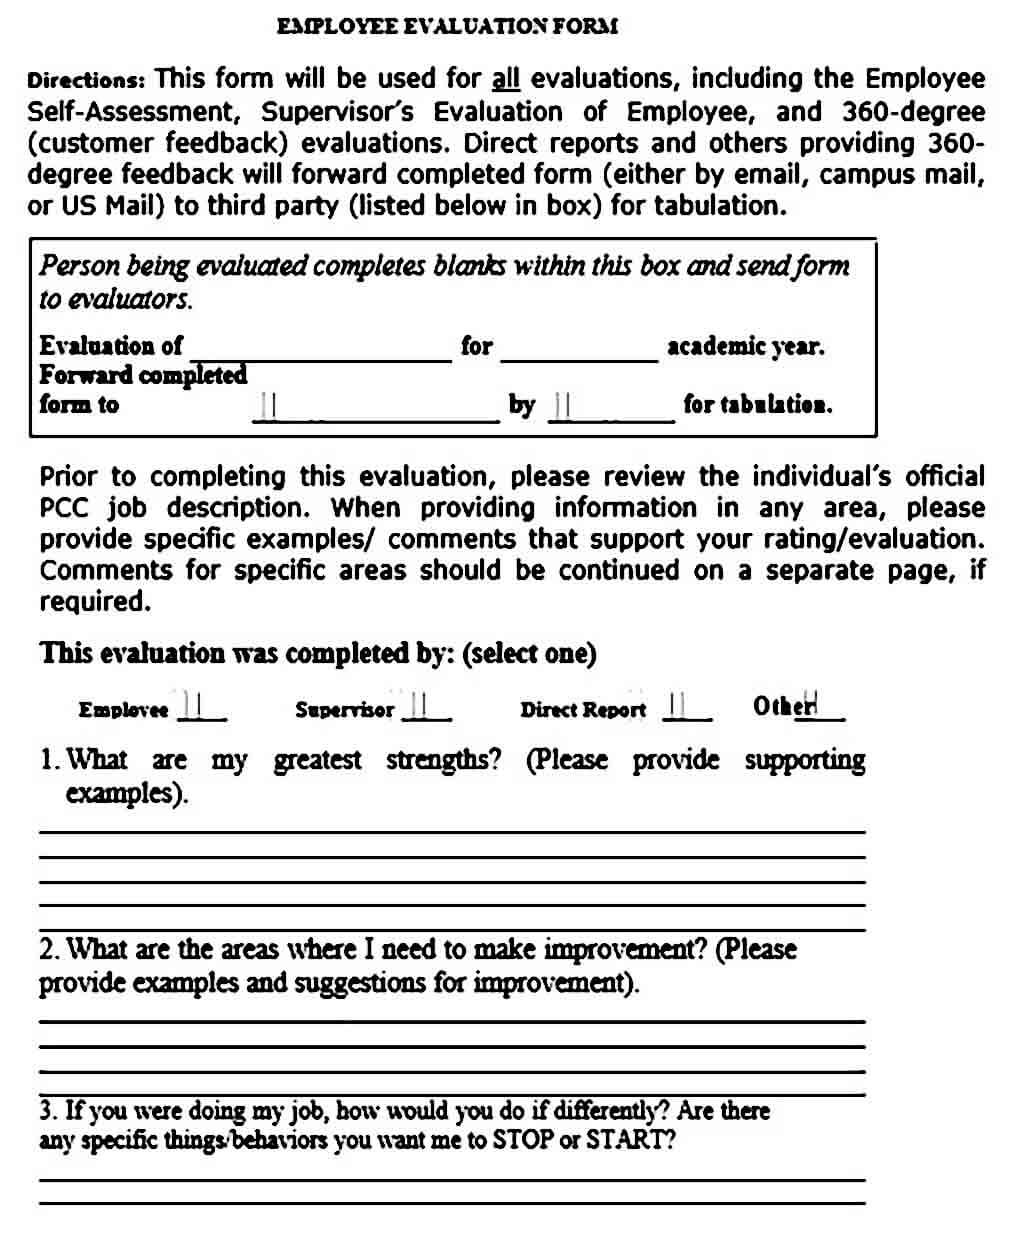 employee self evaluation form